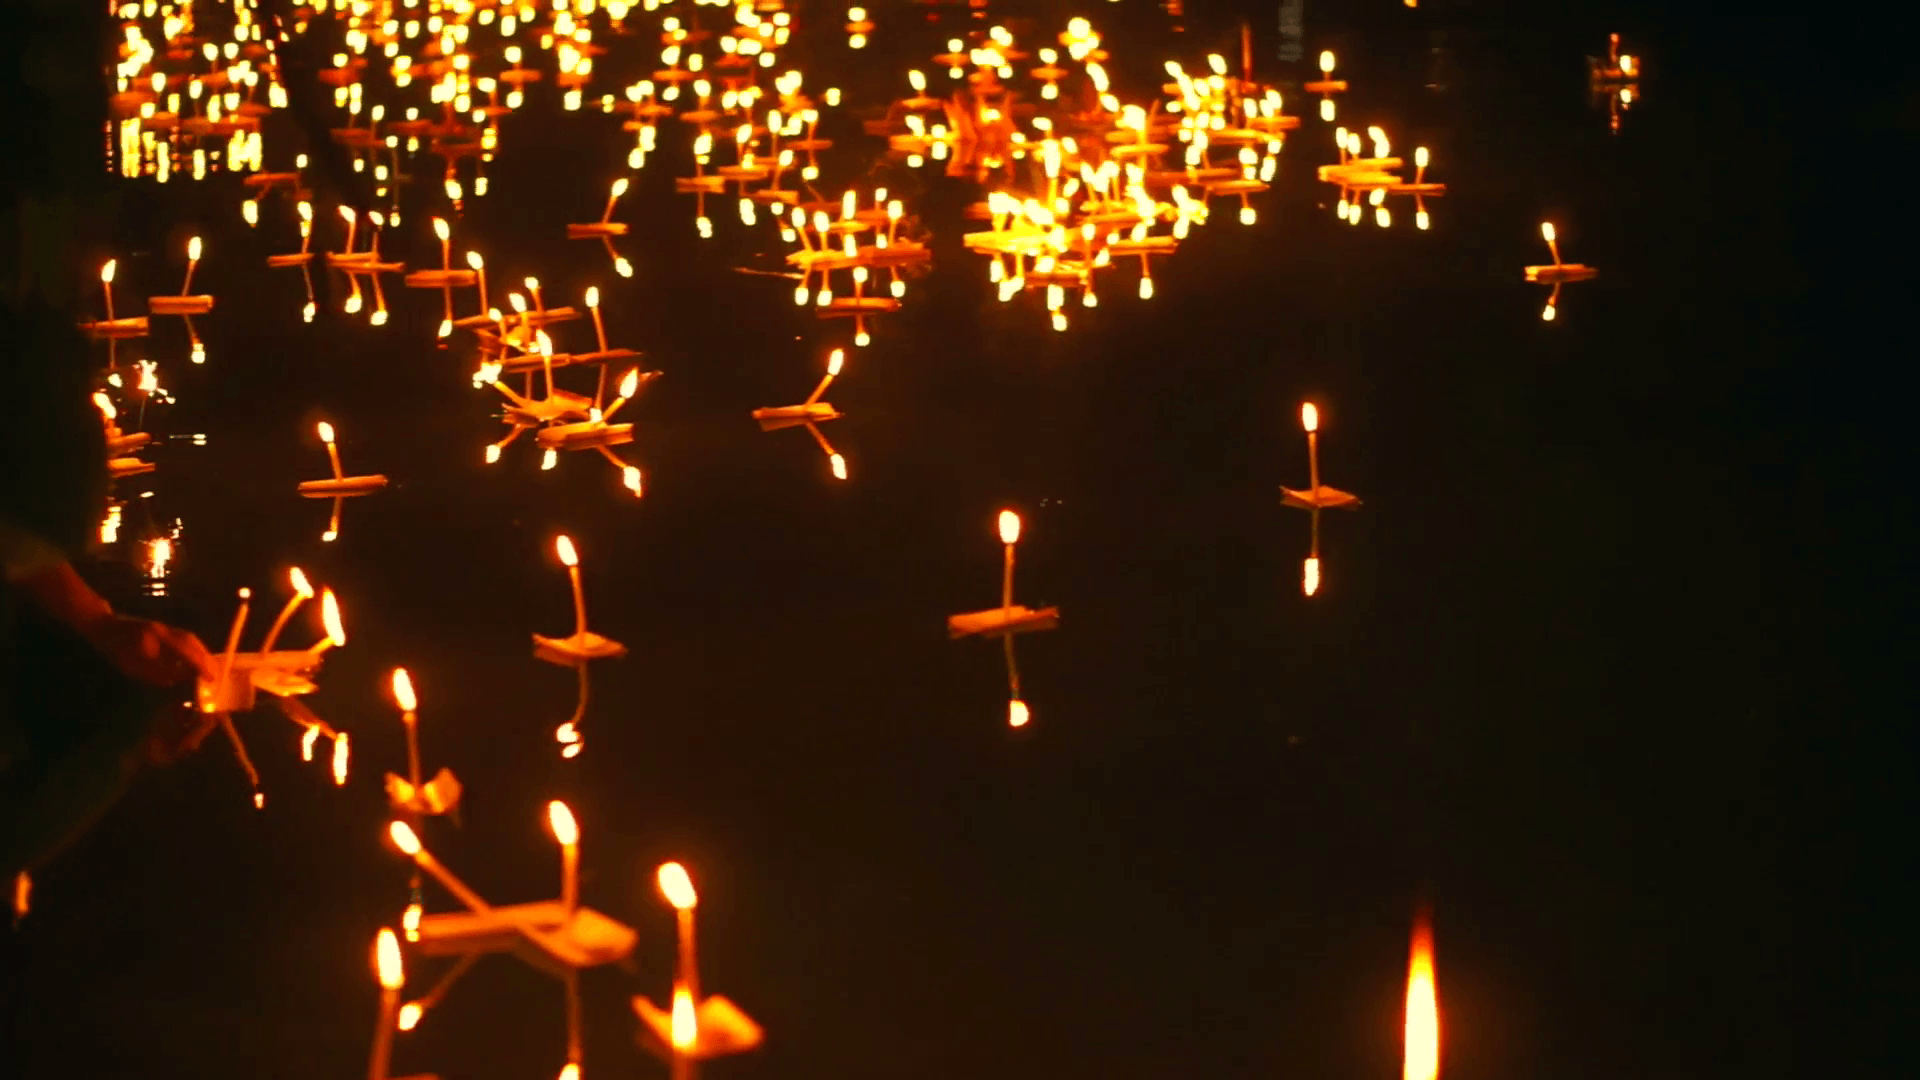 Loi Krathong Festival in Chiangmai, Thailand. Thousand of floating